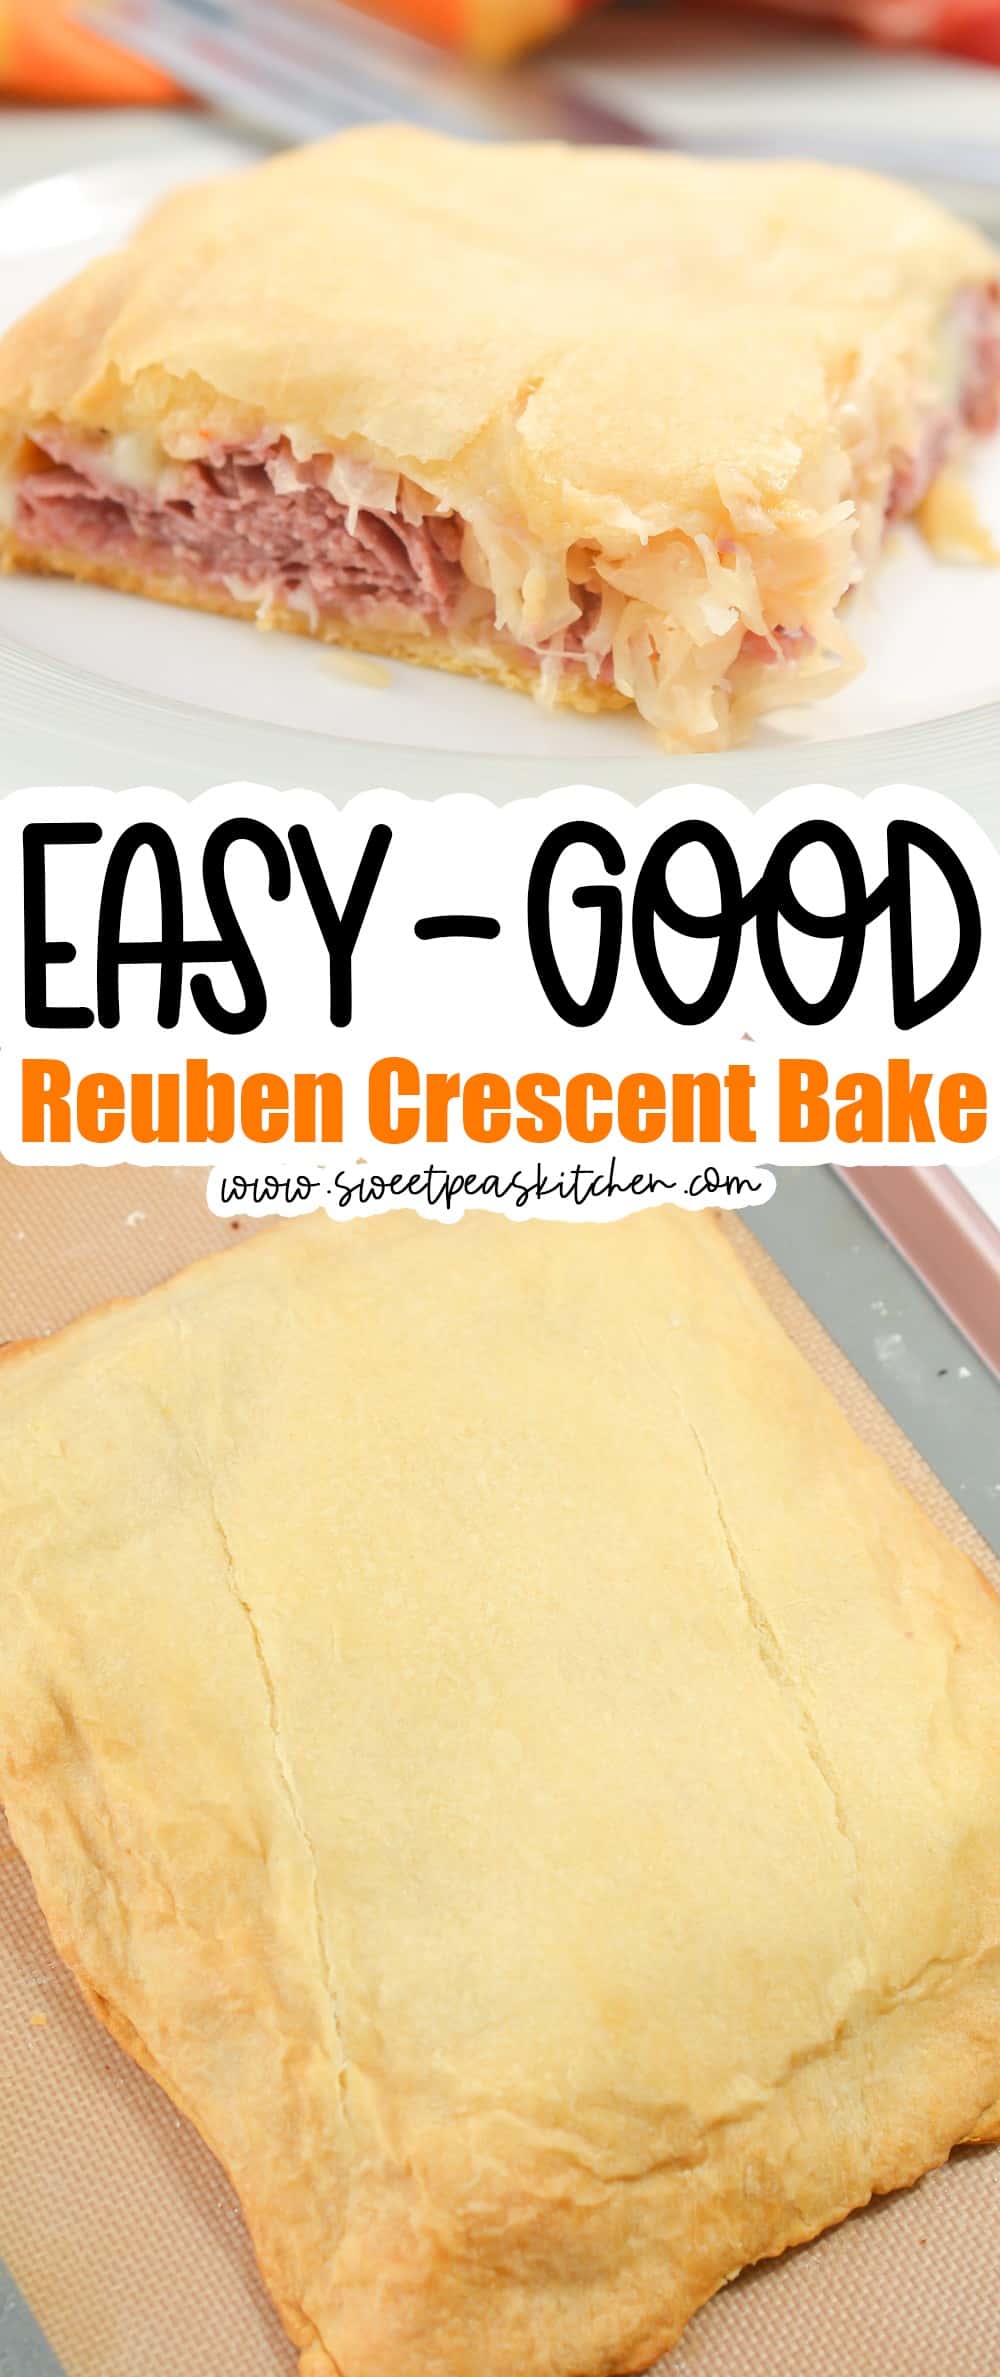 Reuben Crescent Bake on pinterest